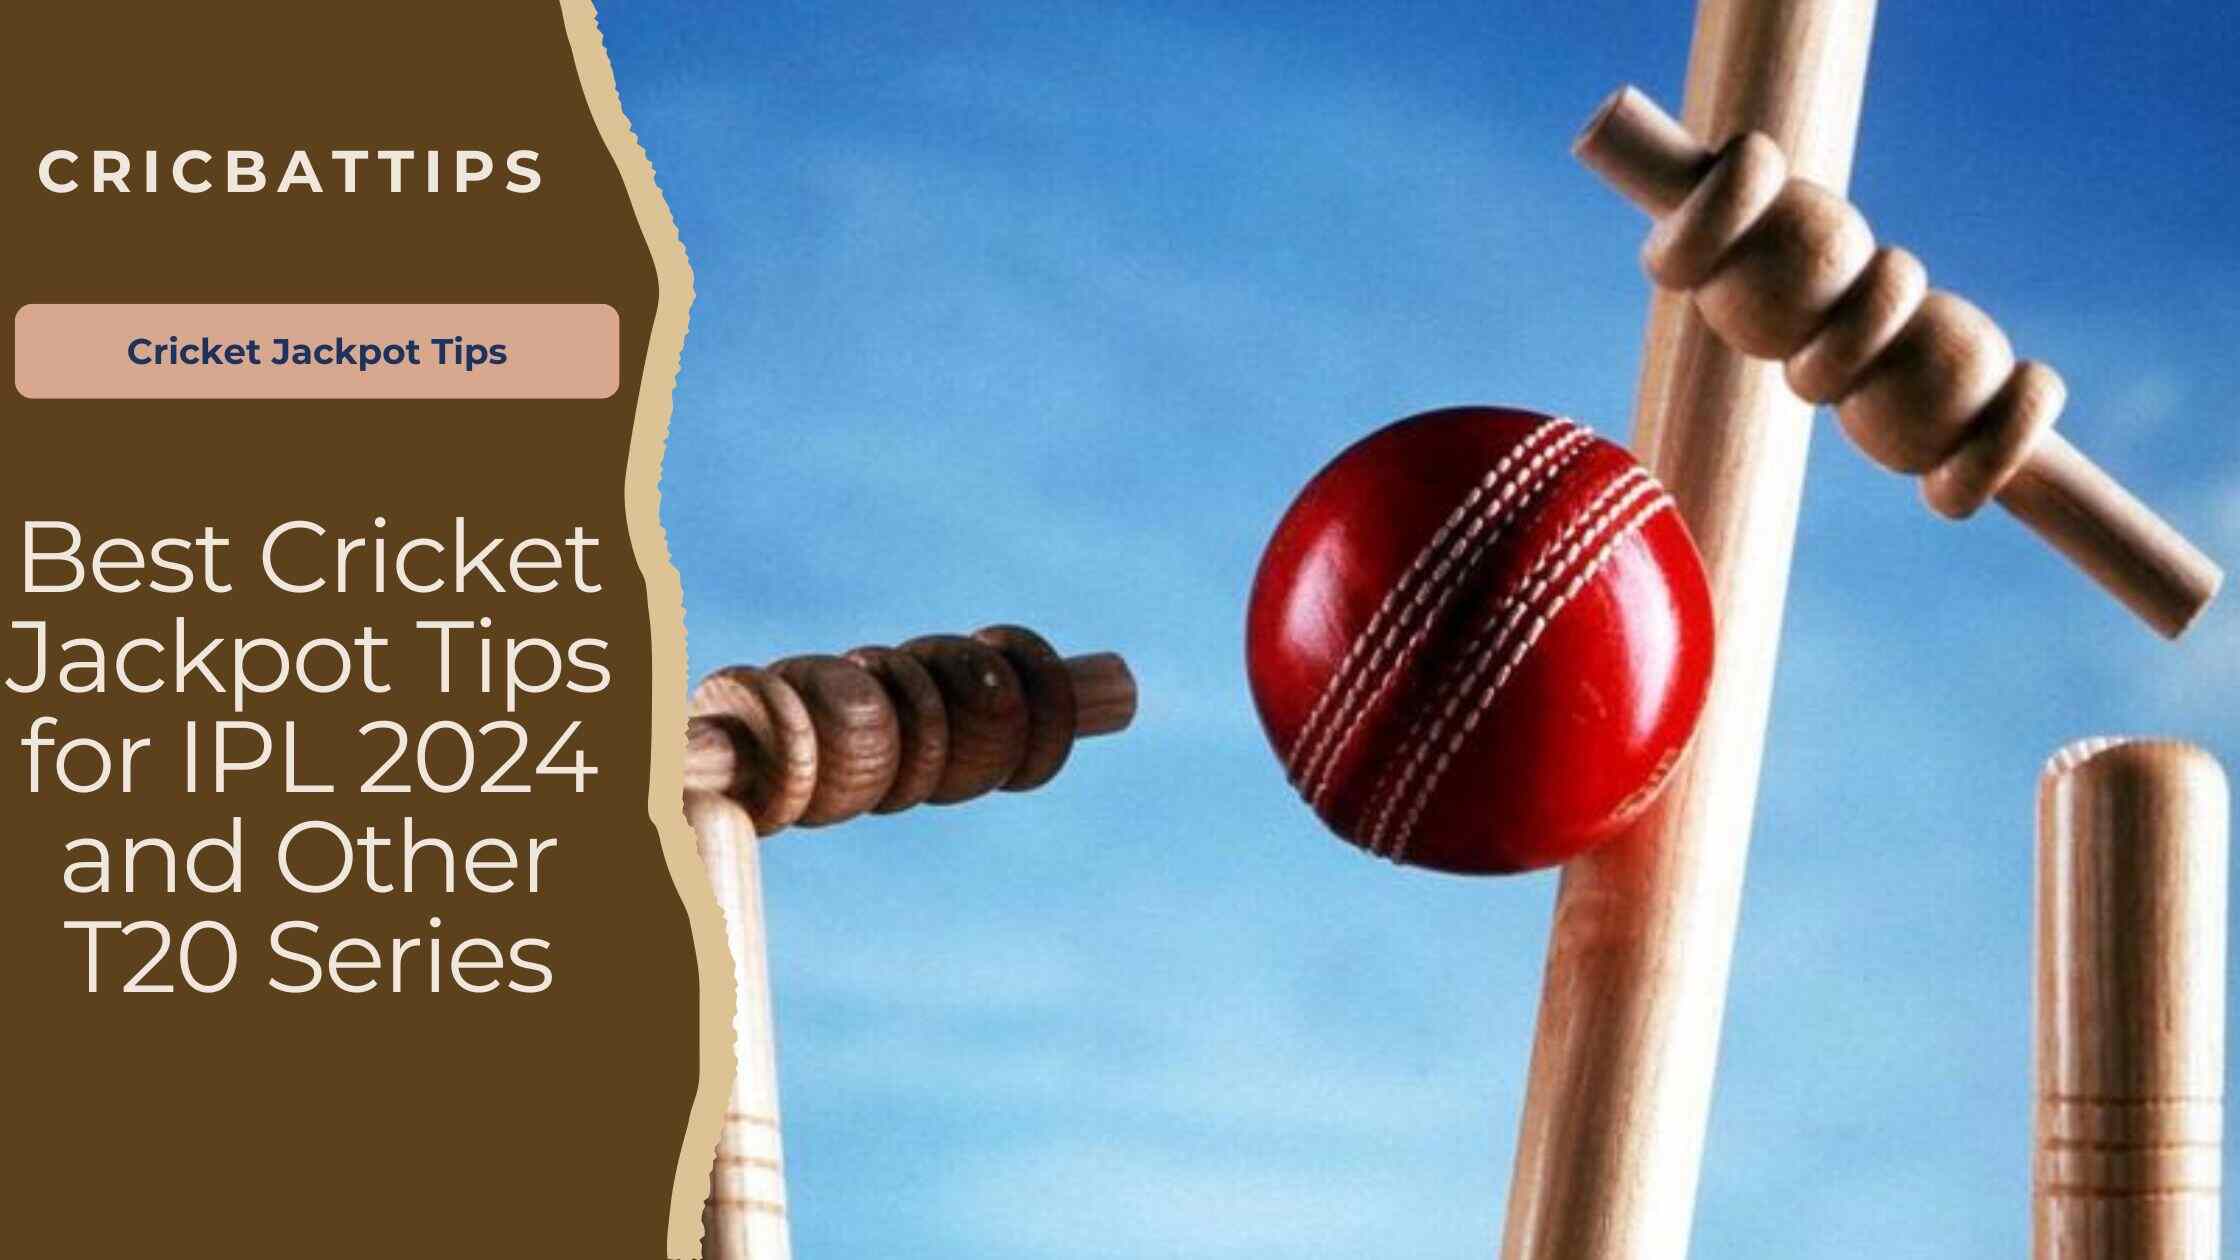 Cricket Jackpot Tips